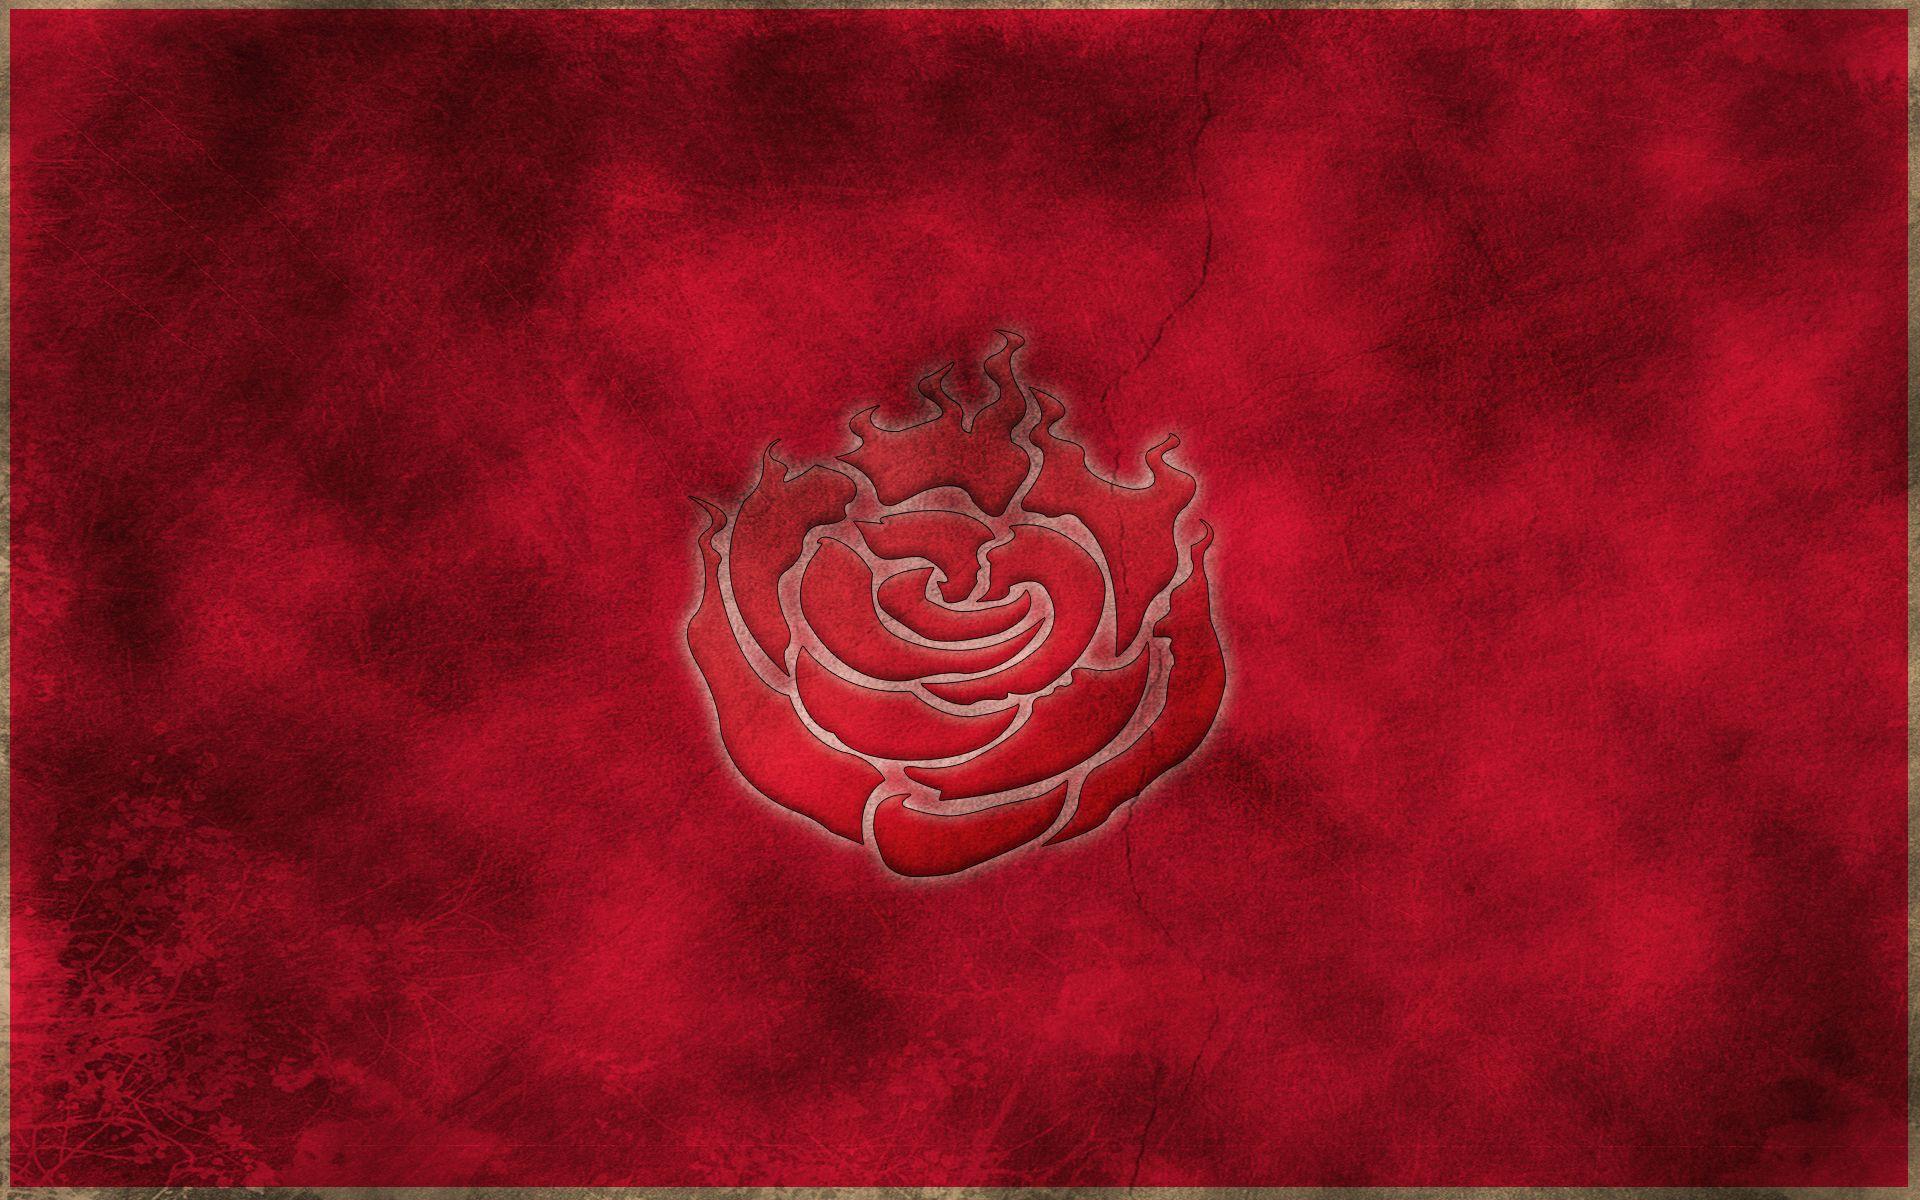 Rwby Ruby Rose Symbol Wallpaper By Crypticspider D7fz6qp